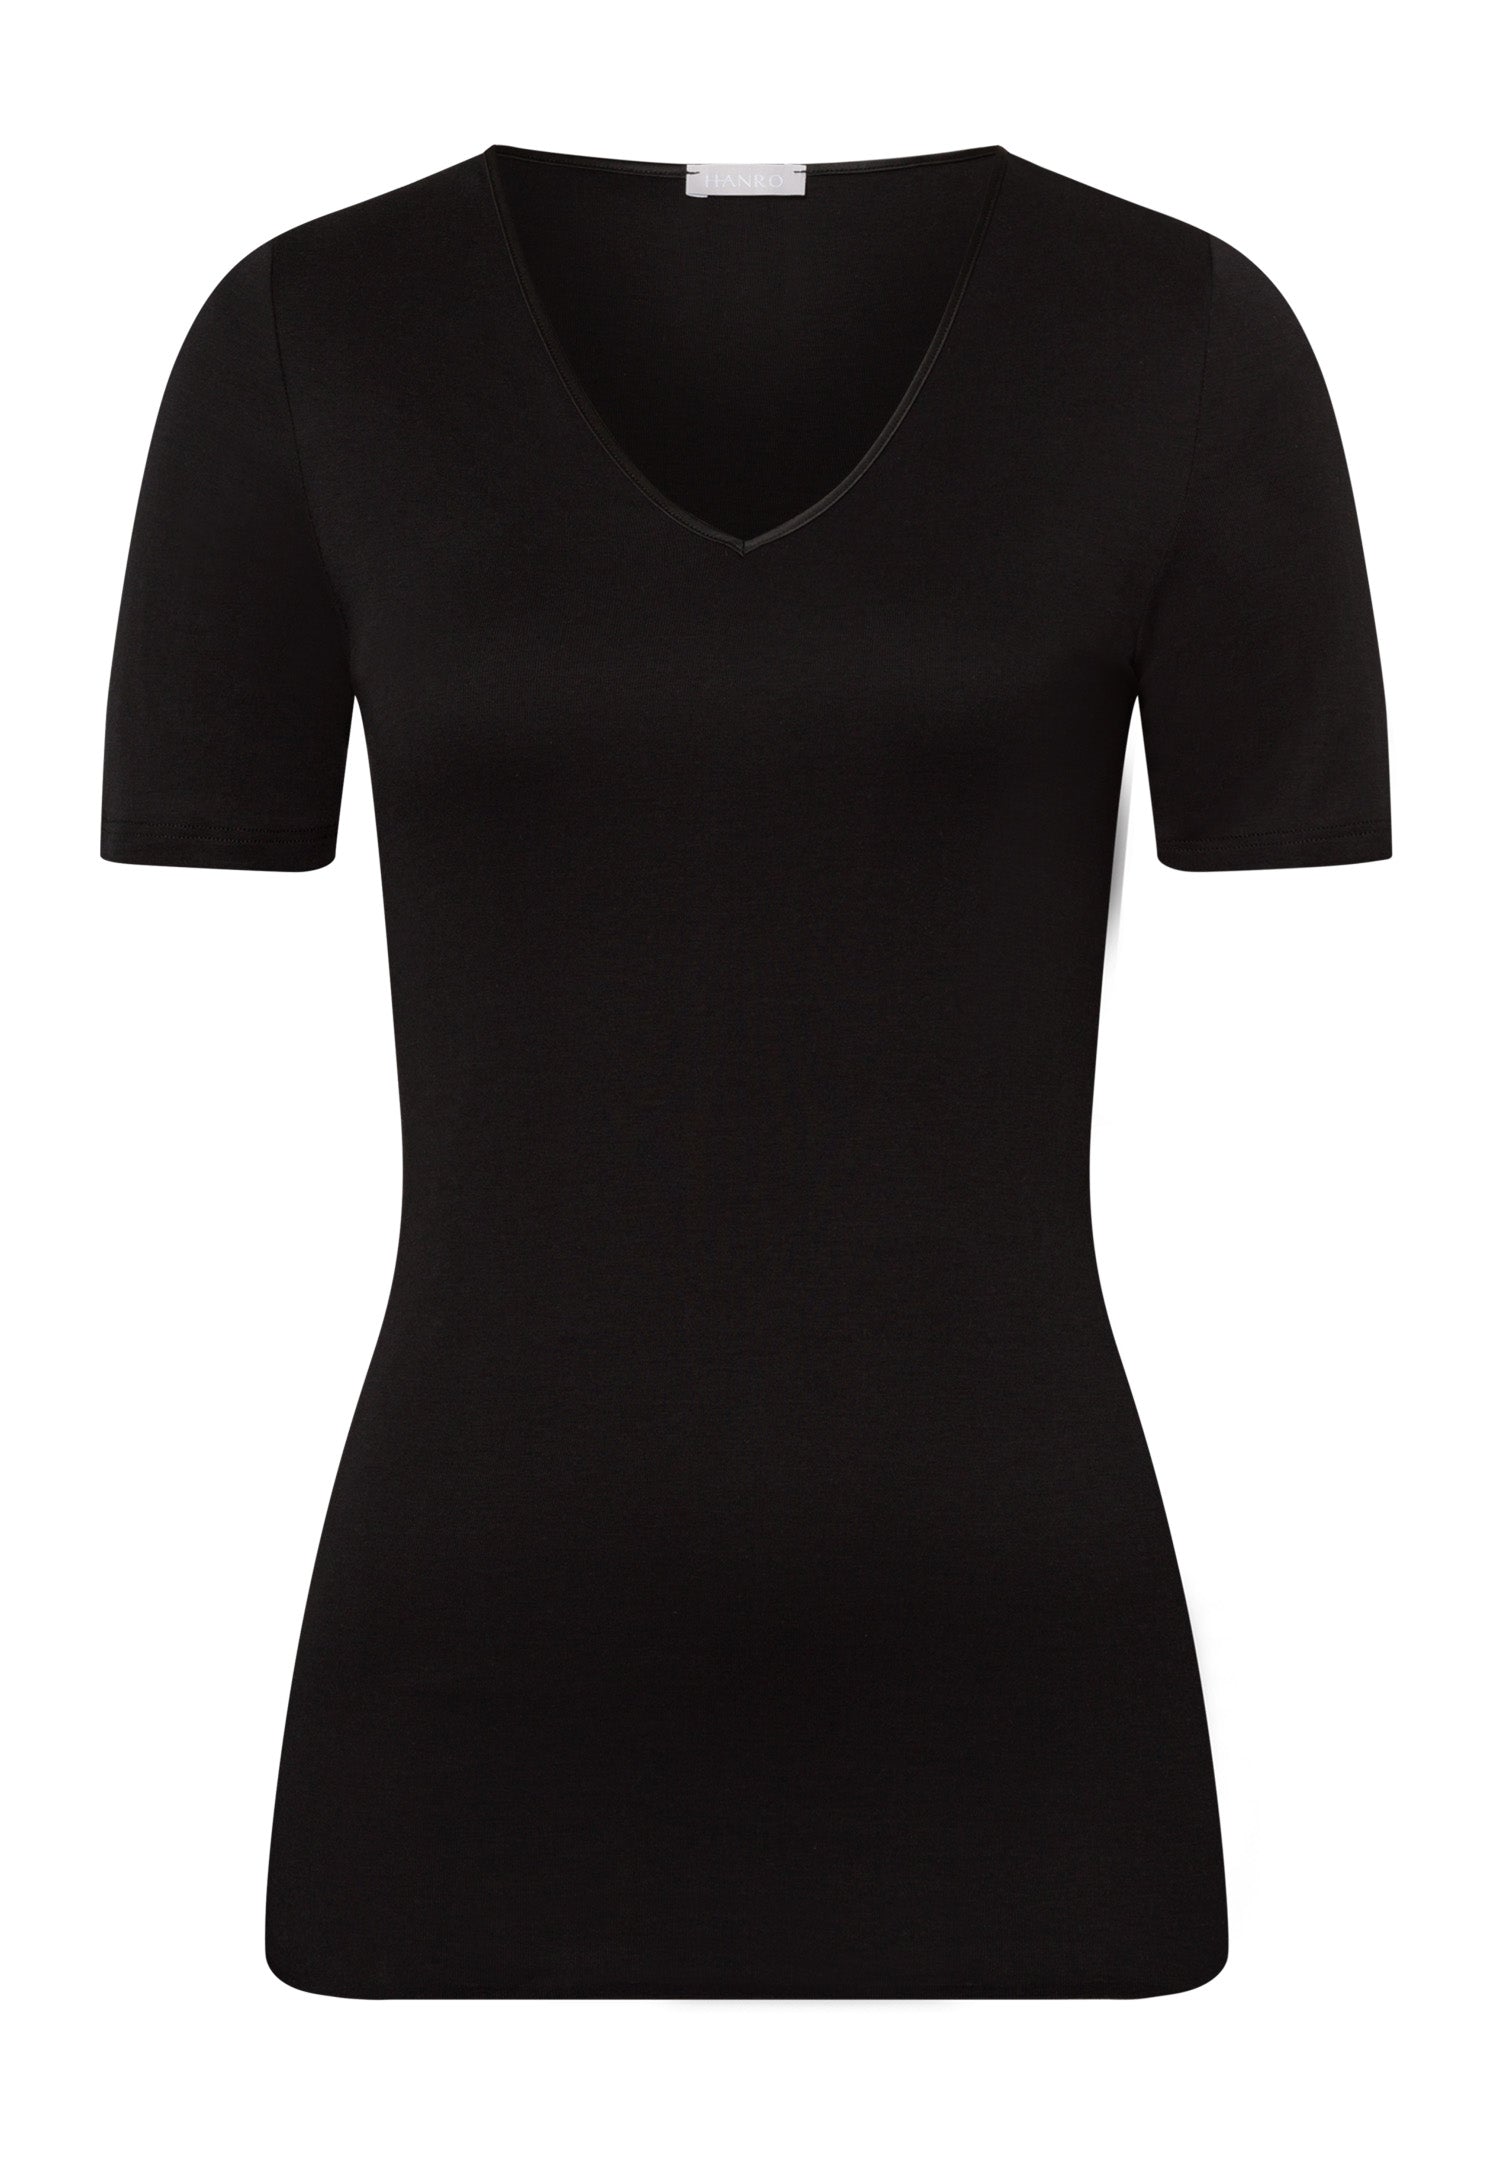 HANRO Black Cotton Seamless V-Neck Short Sleeve Shirt